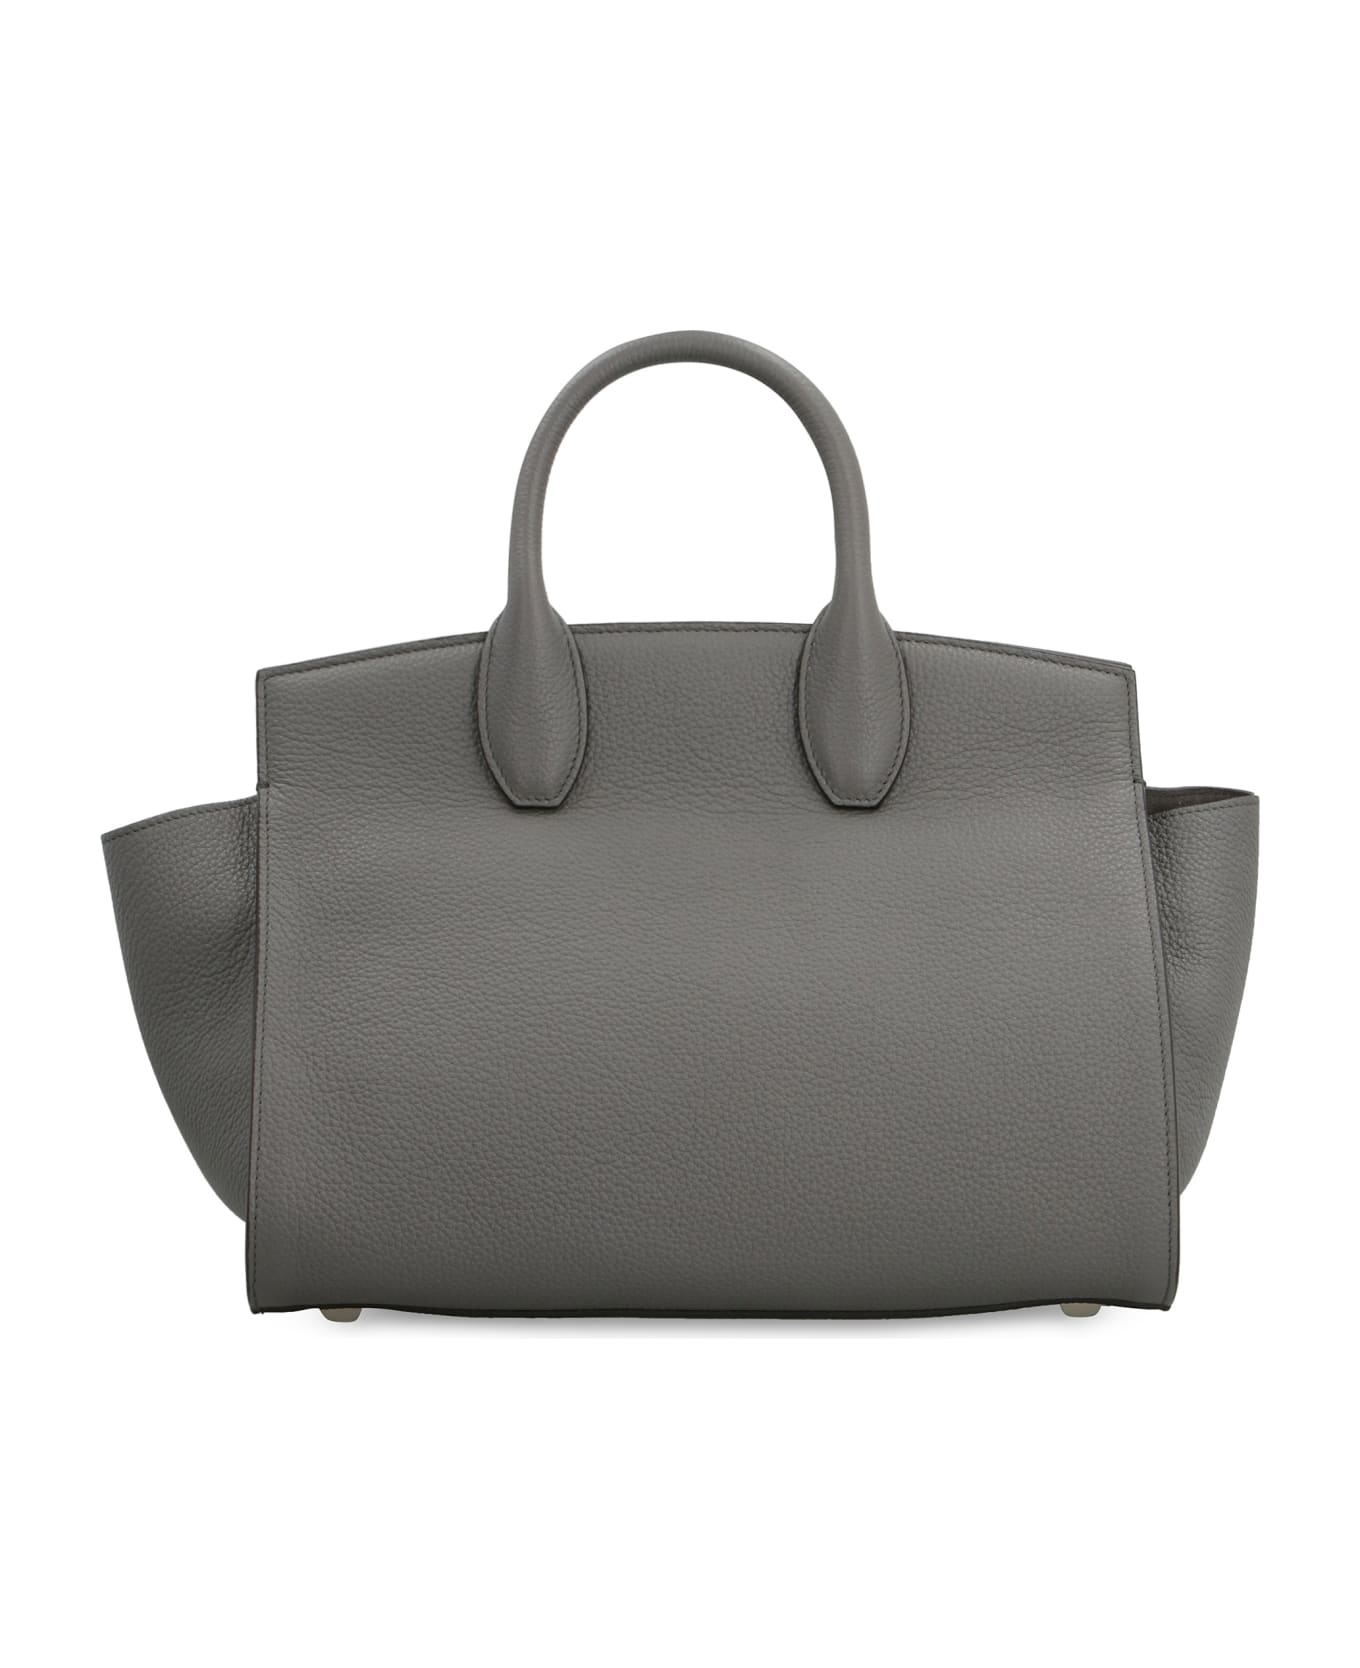 Ferragamo Studio Soft Leather Handbag - DARK GREY